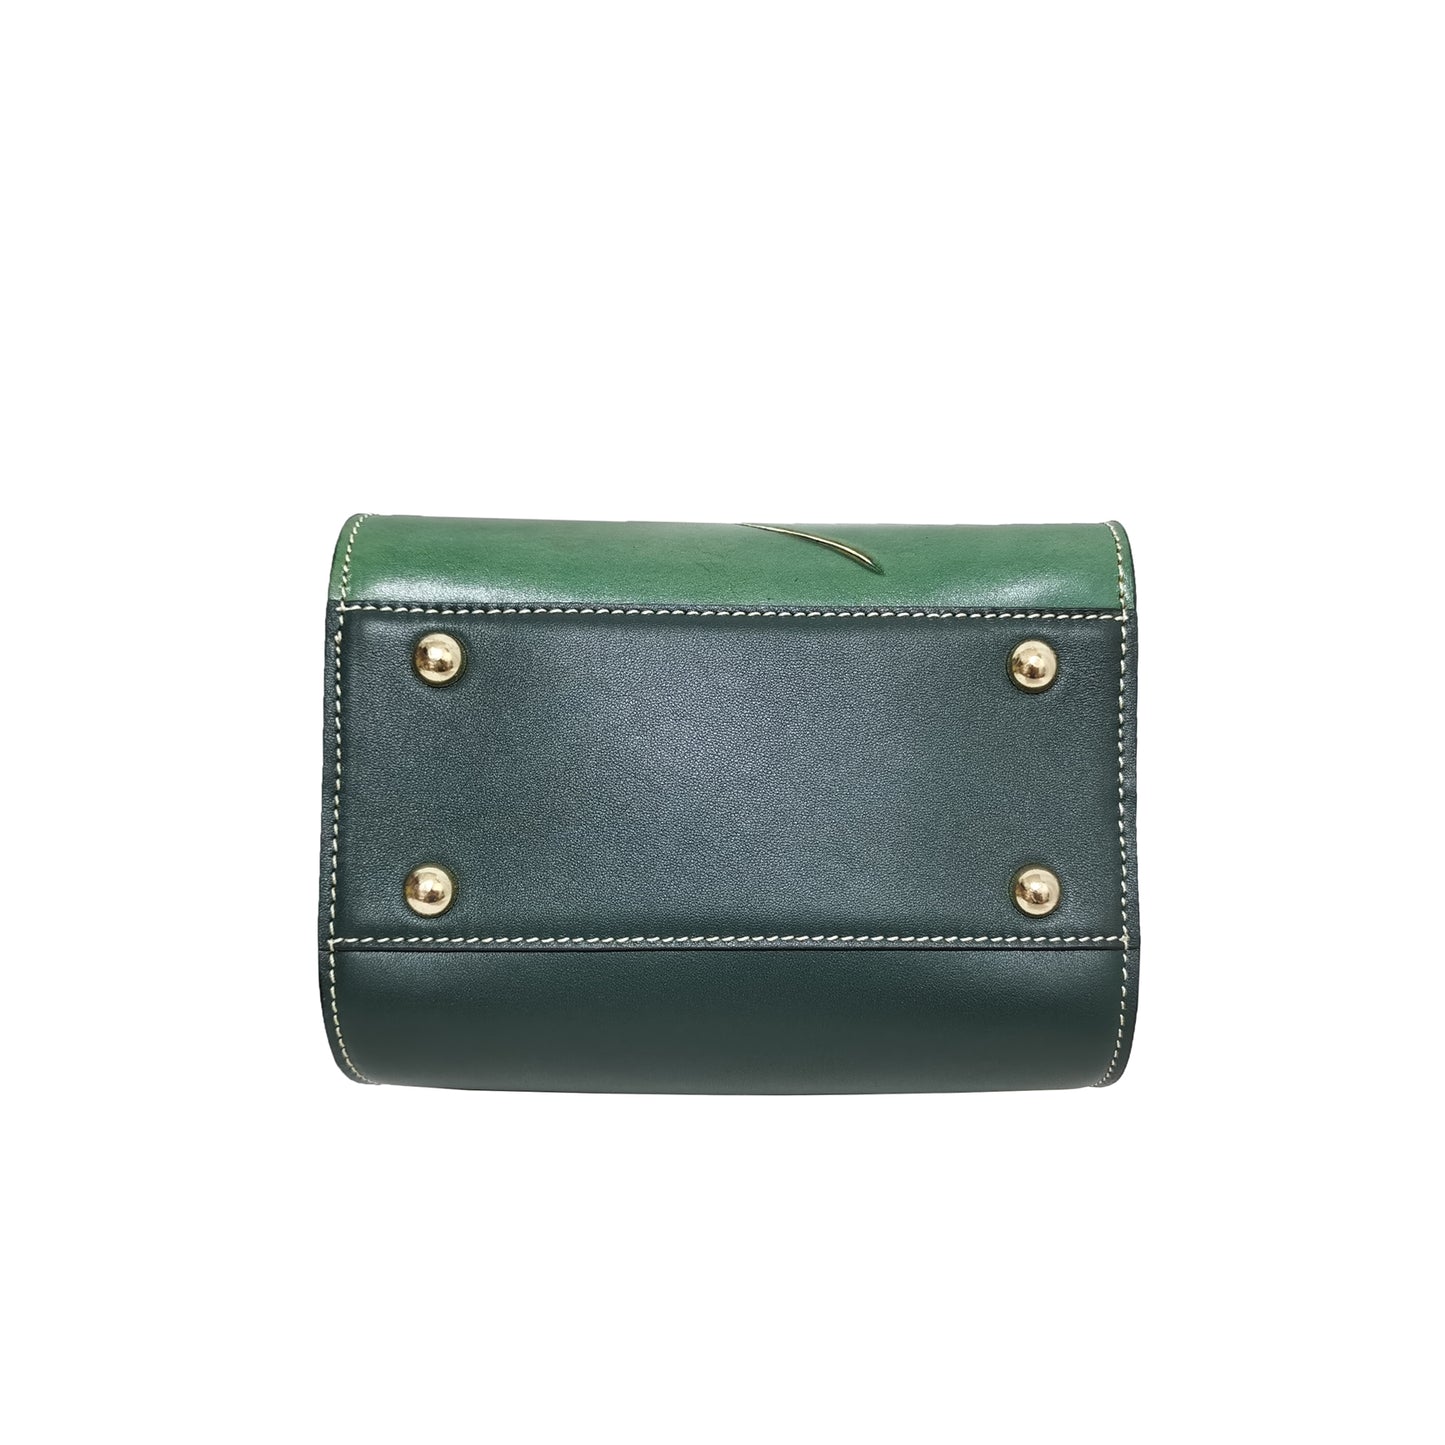 Women's genuine cowhide leather engraved handbag Boling design by Tomorrow Closet